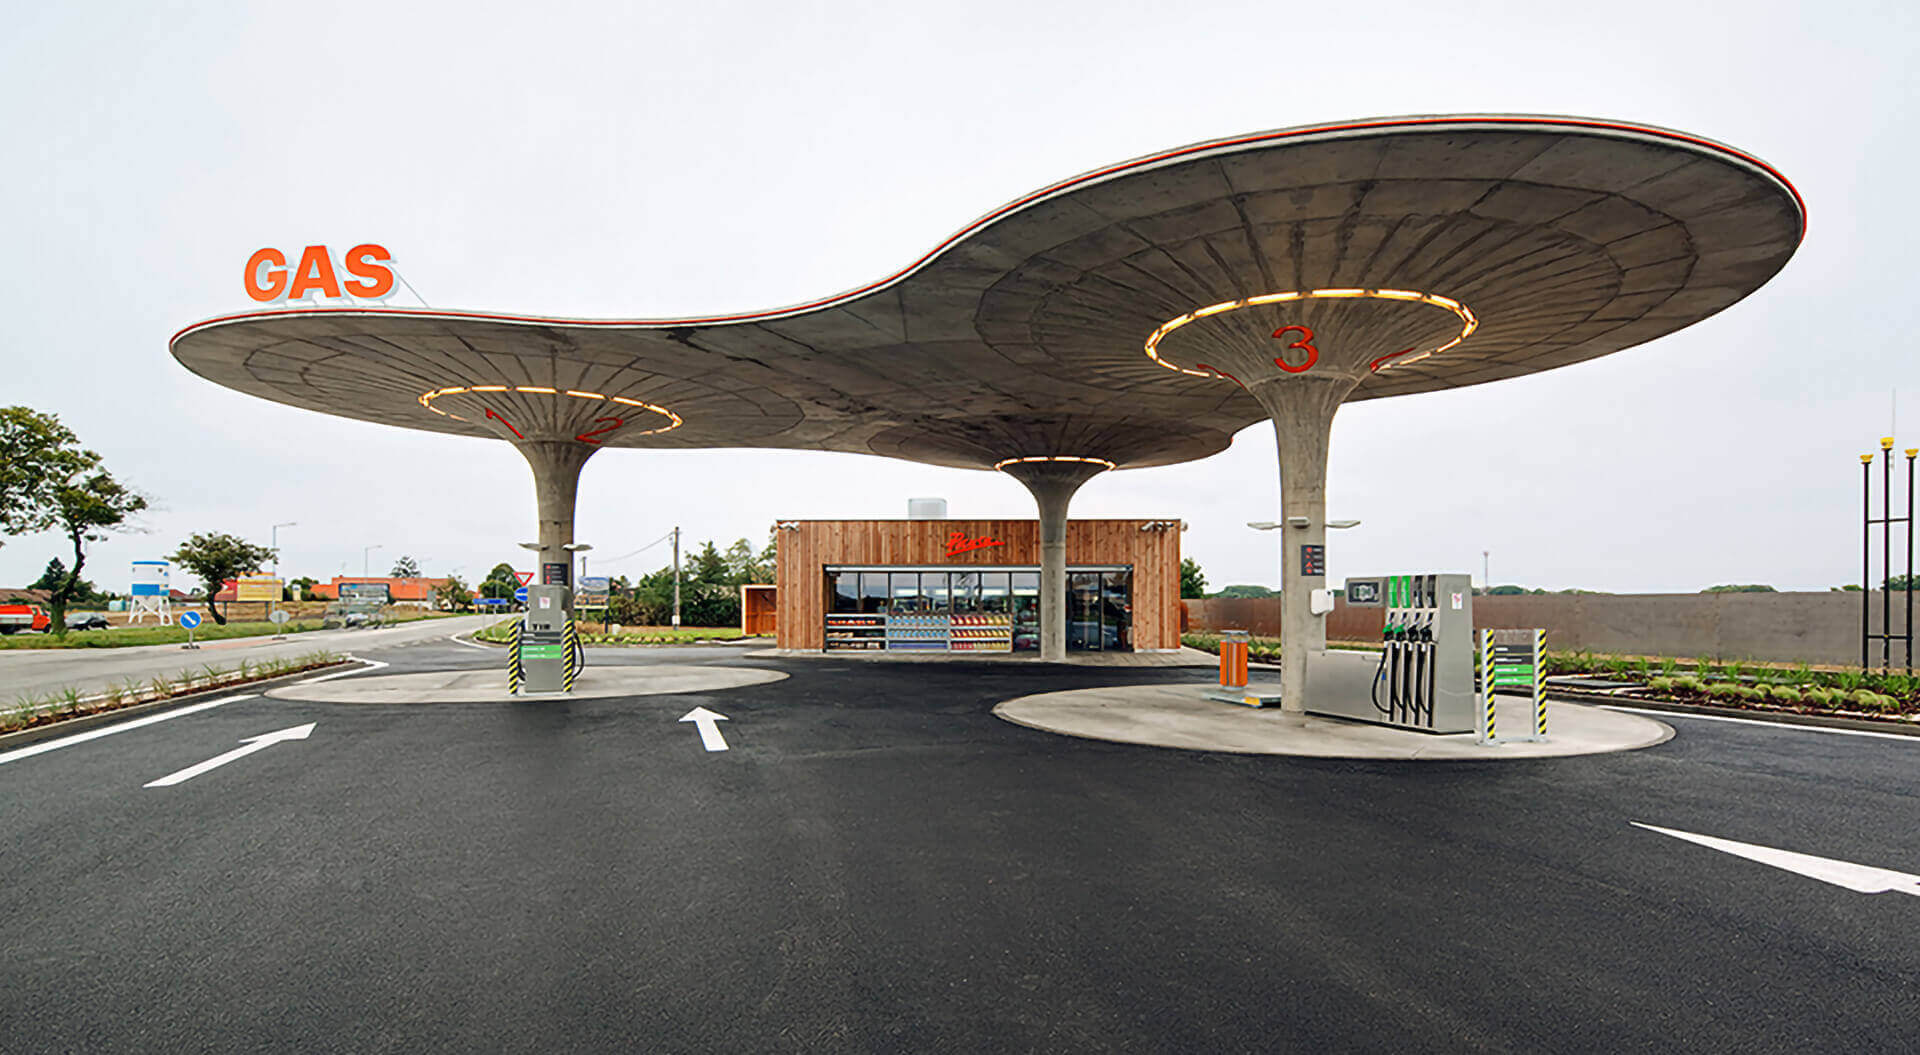 Gas Station Petrol Forecourt Benchmark, Arne Jacobsen, Innovative Architecture, Canopy Design, Forecourt Graphics, Matuskovo Slovakia 2011 - CampbellRigg Agency